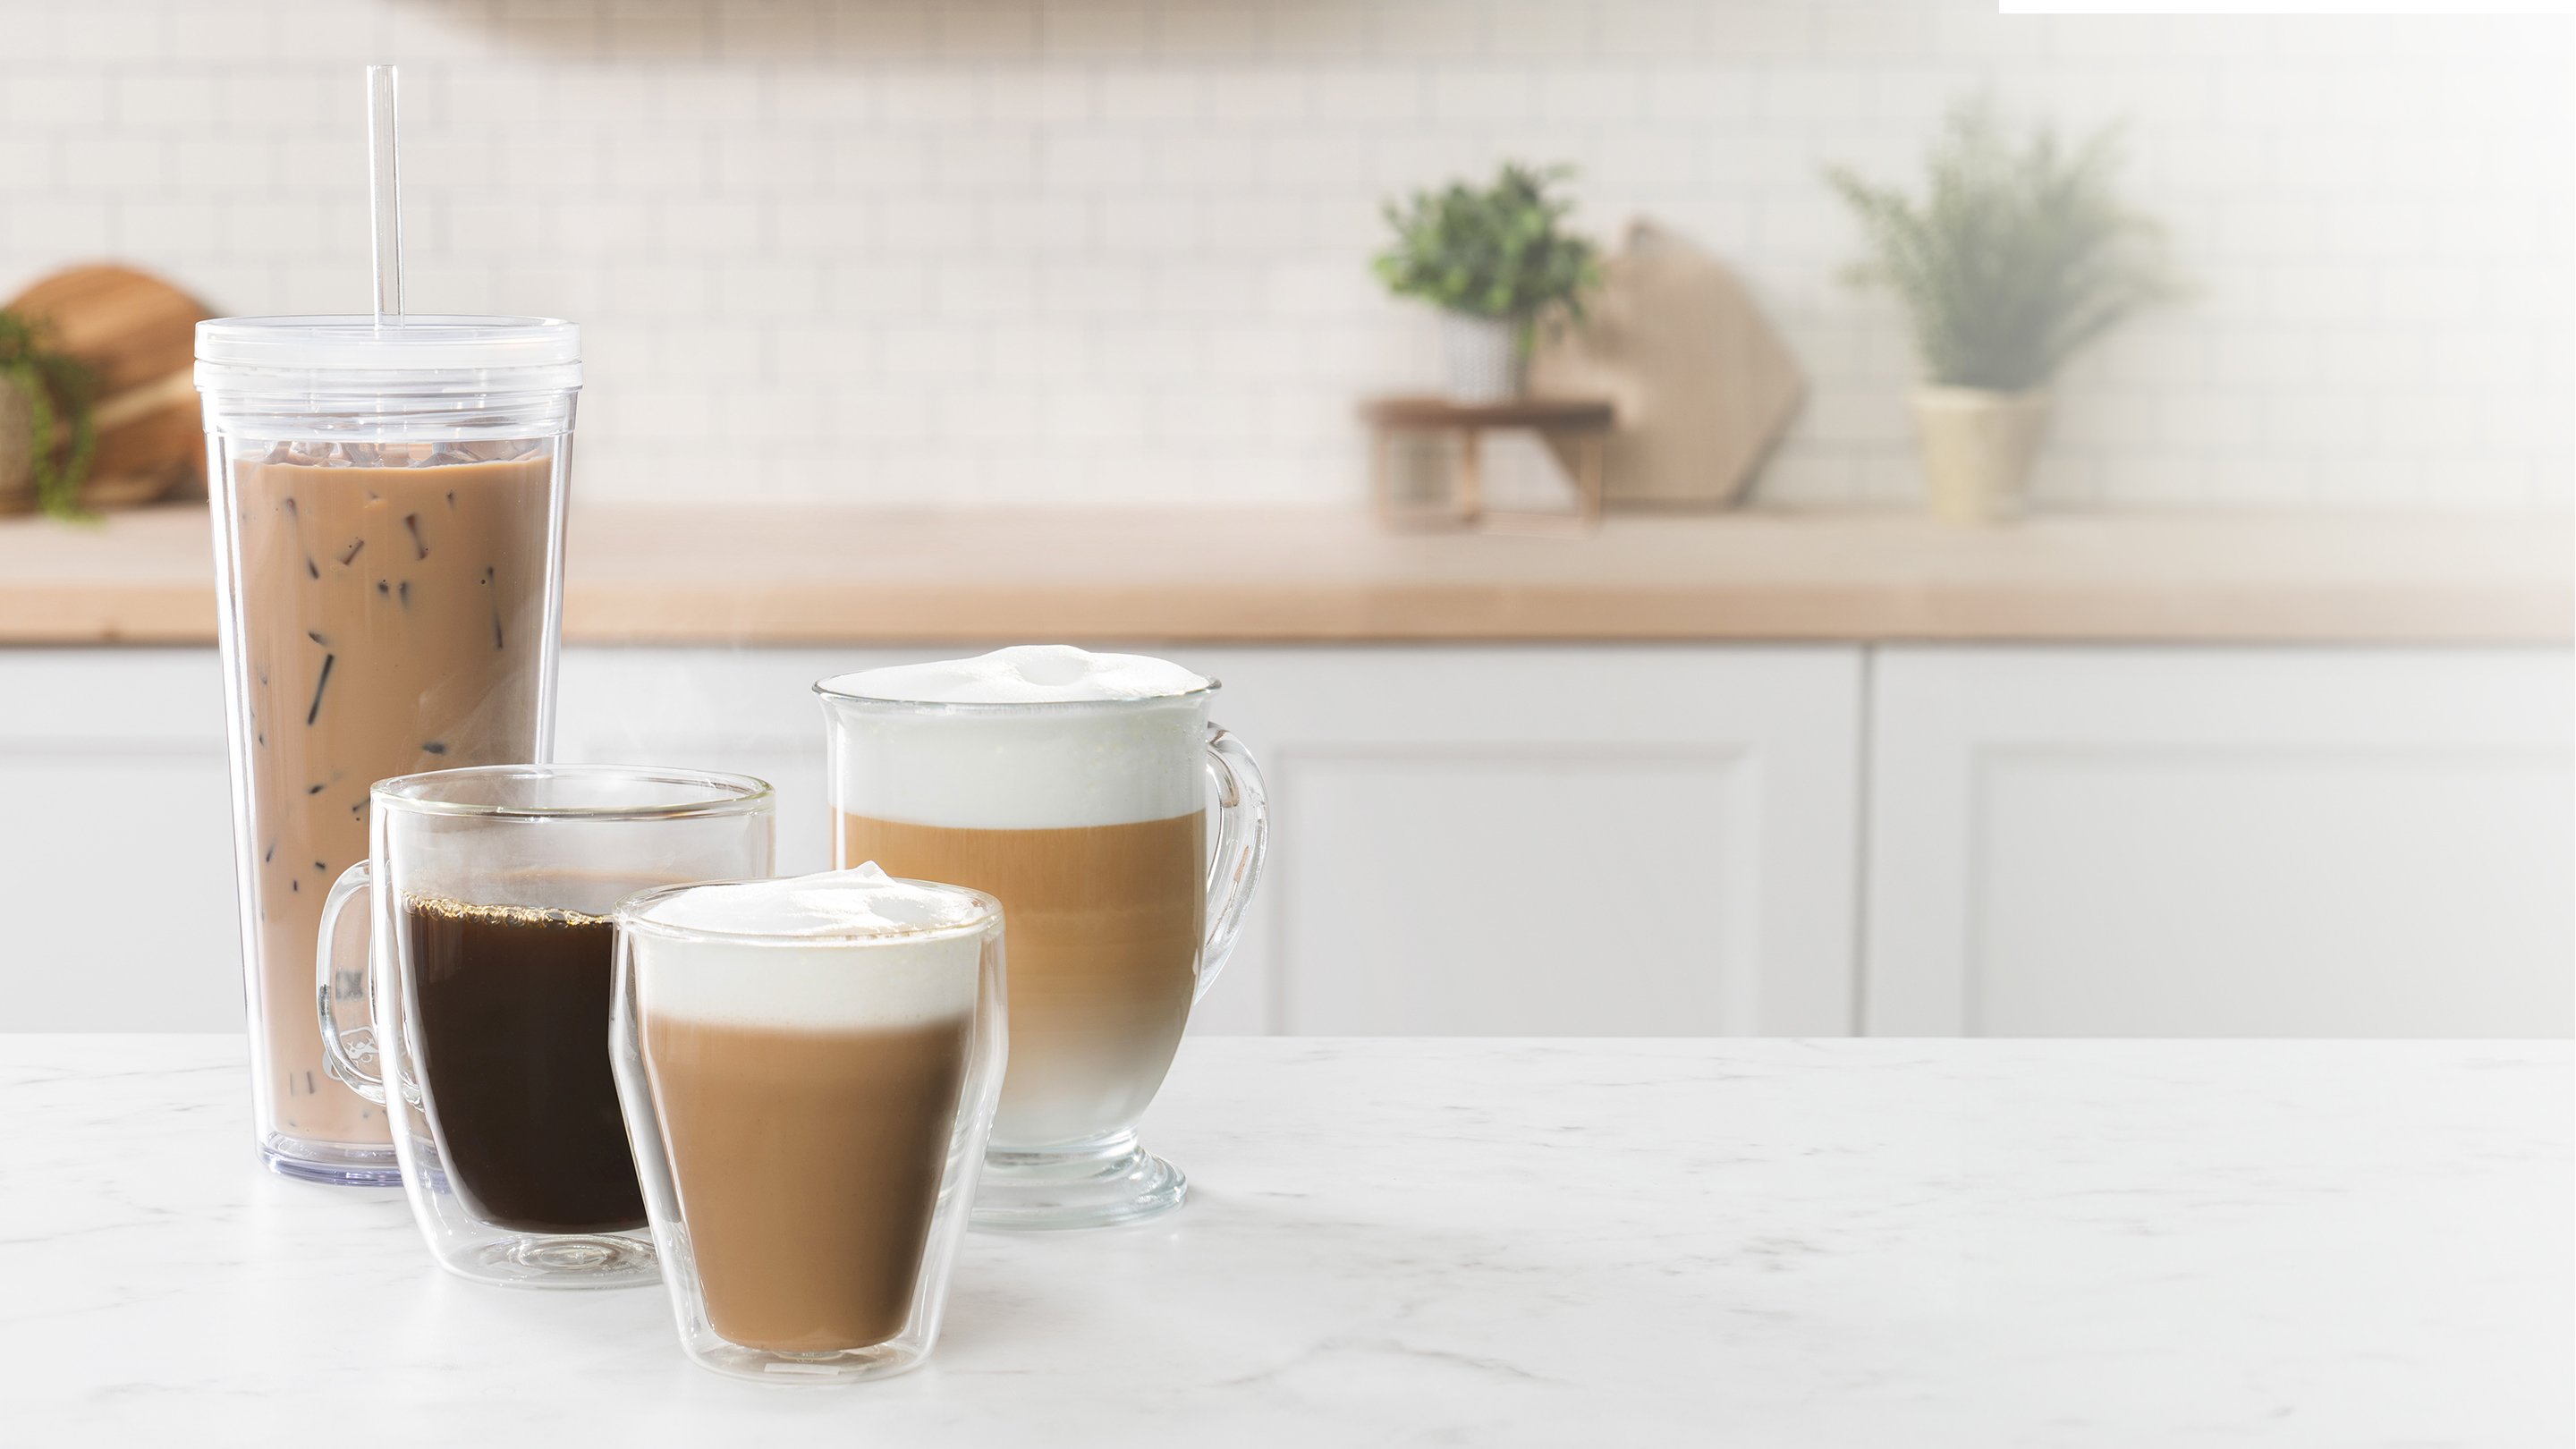 Electric Coffee Maker, espresso 3/6-Cup cafetera electrica cafe / cappuccino